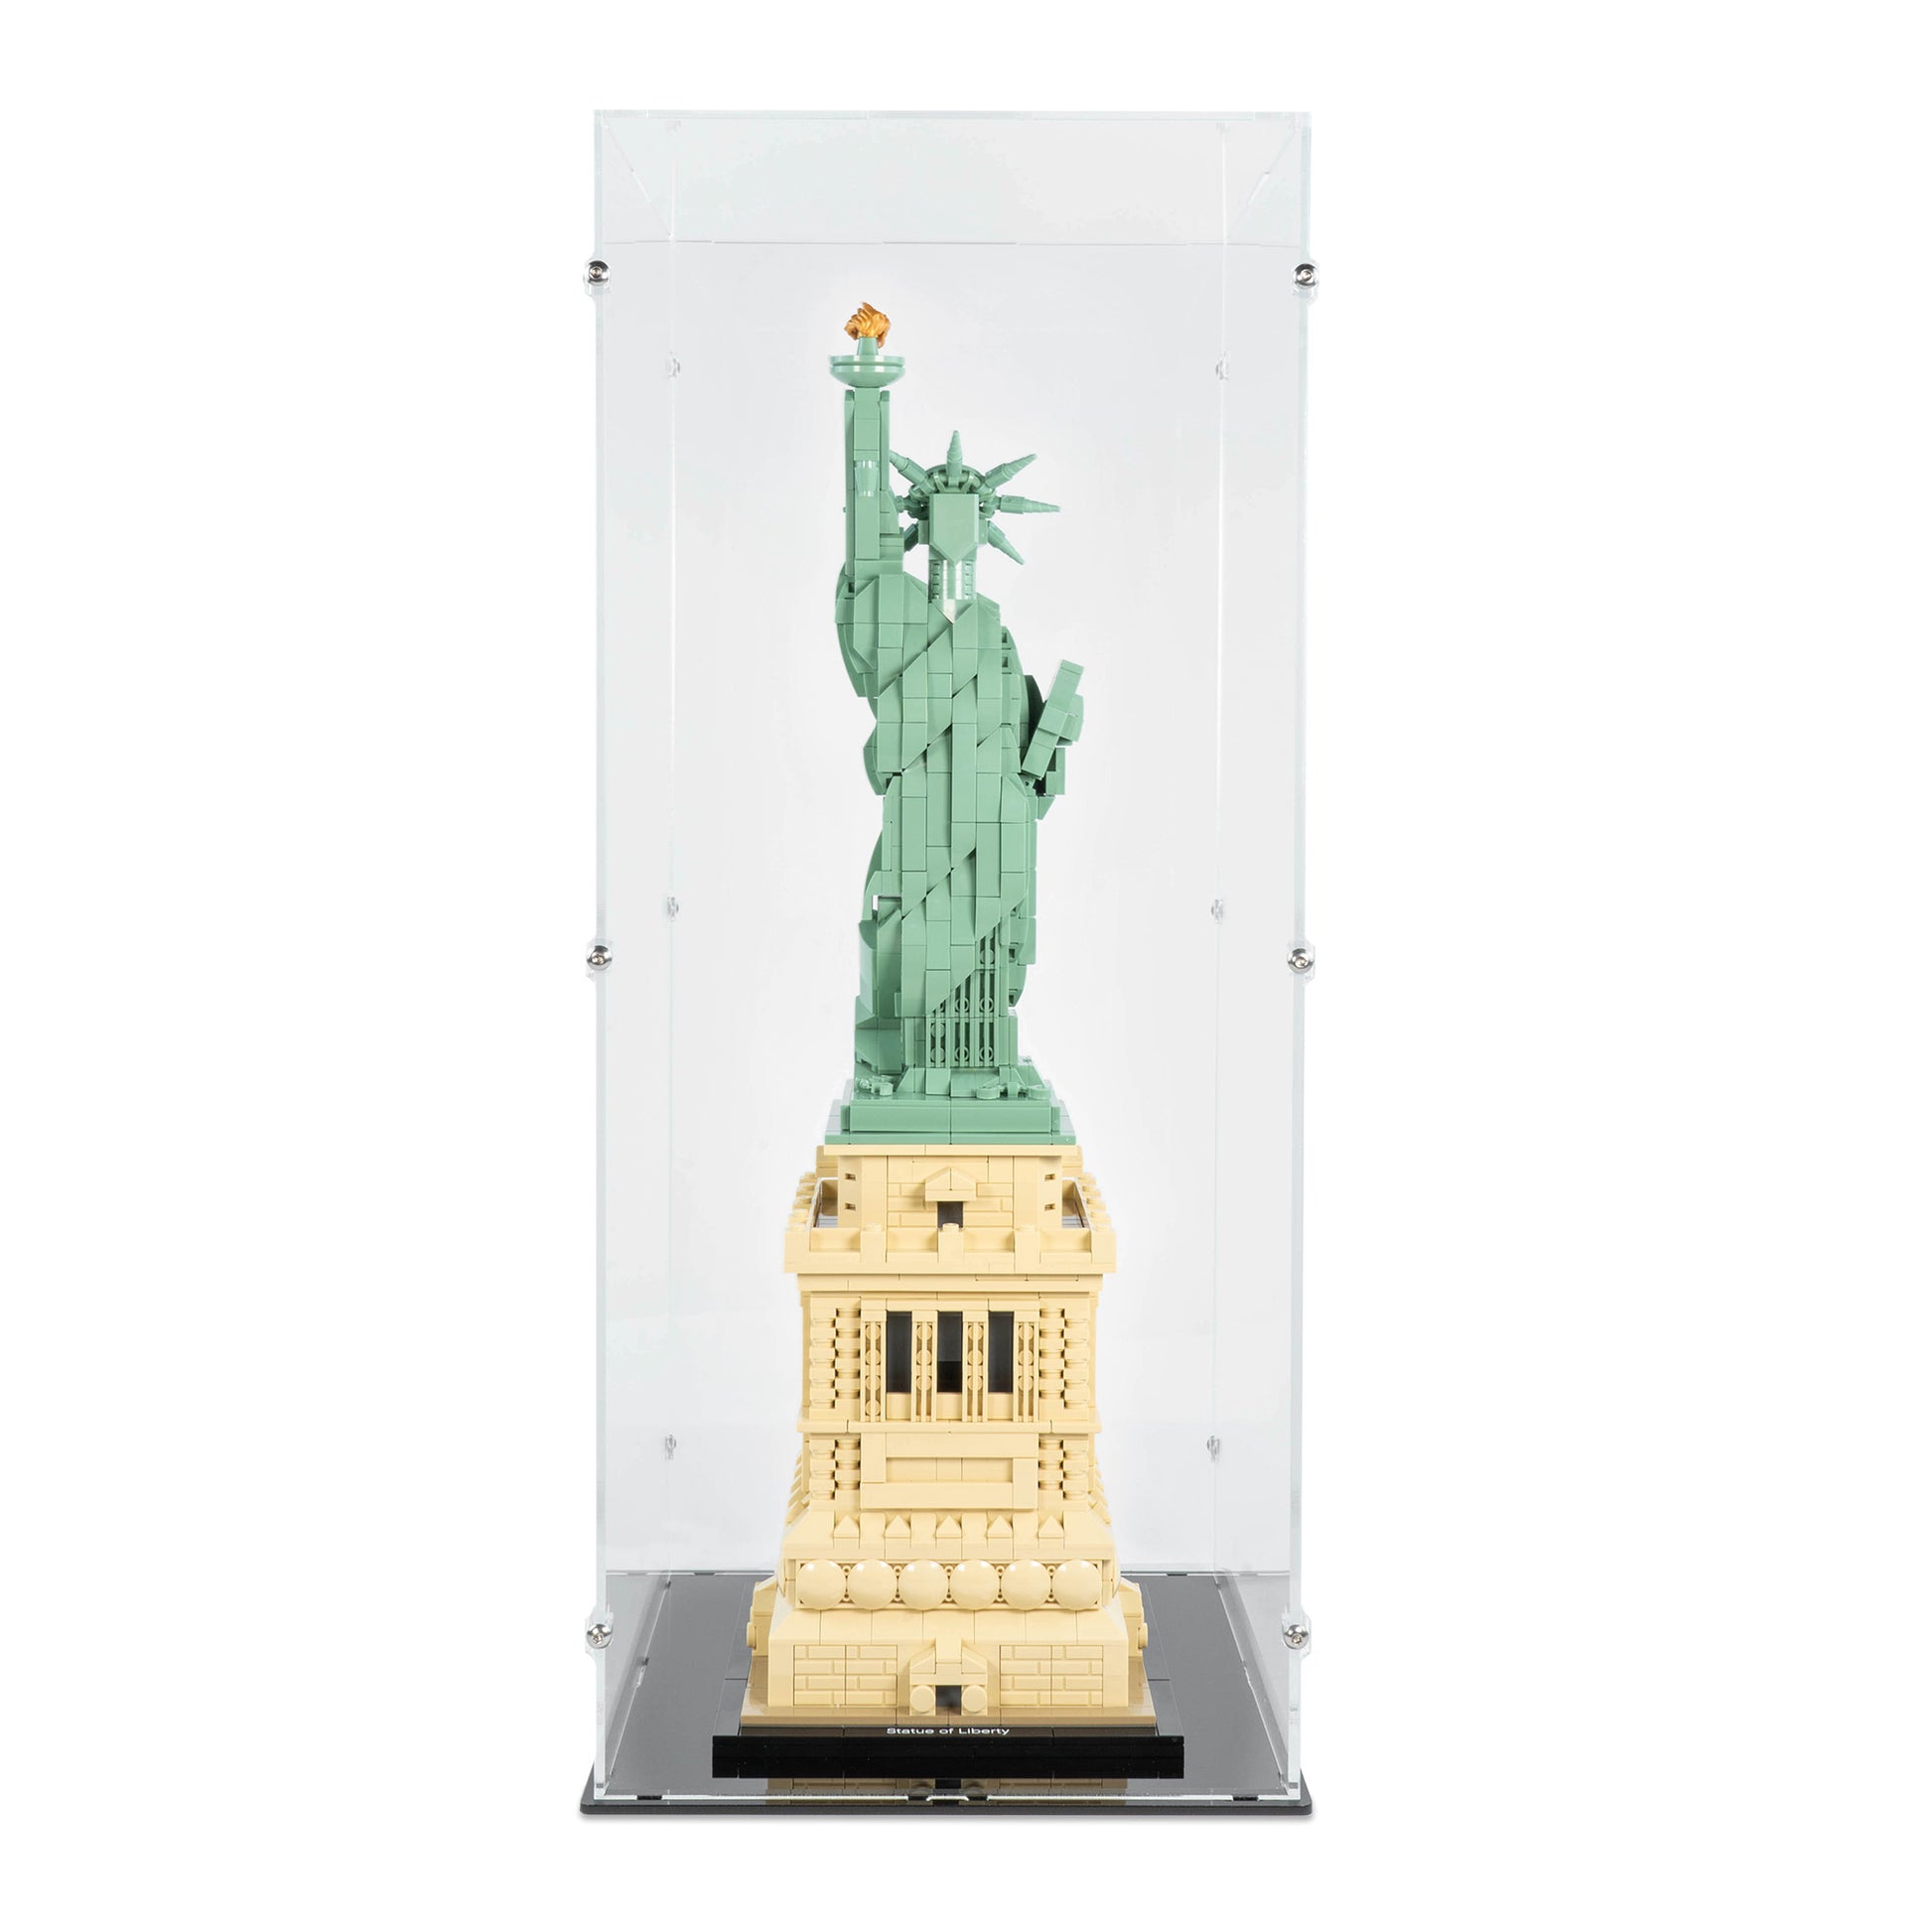 LEGO Architecture: Statue of Liberty (21042)